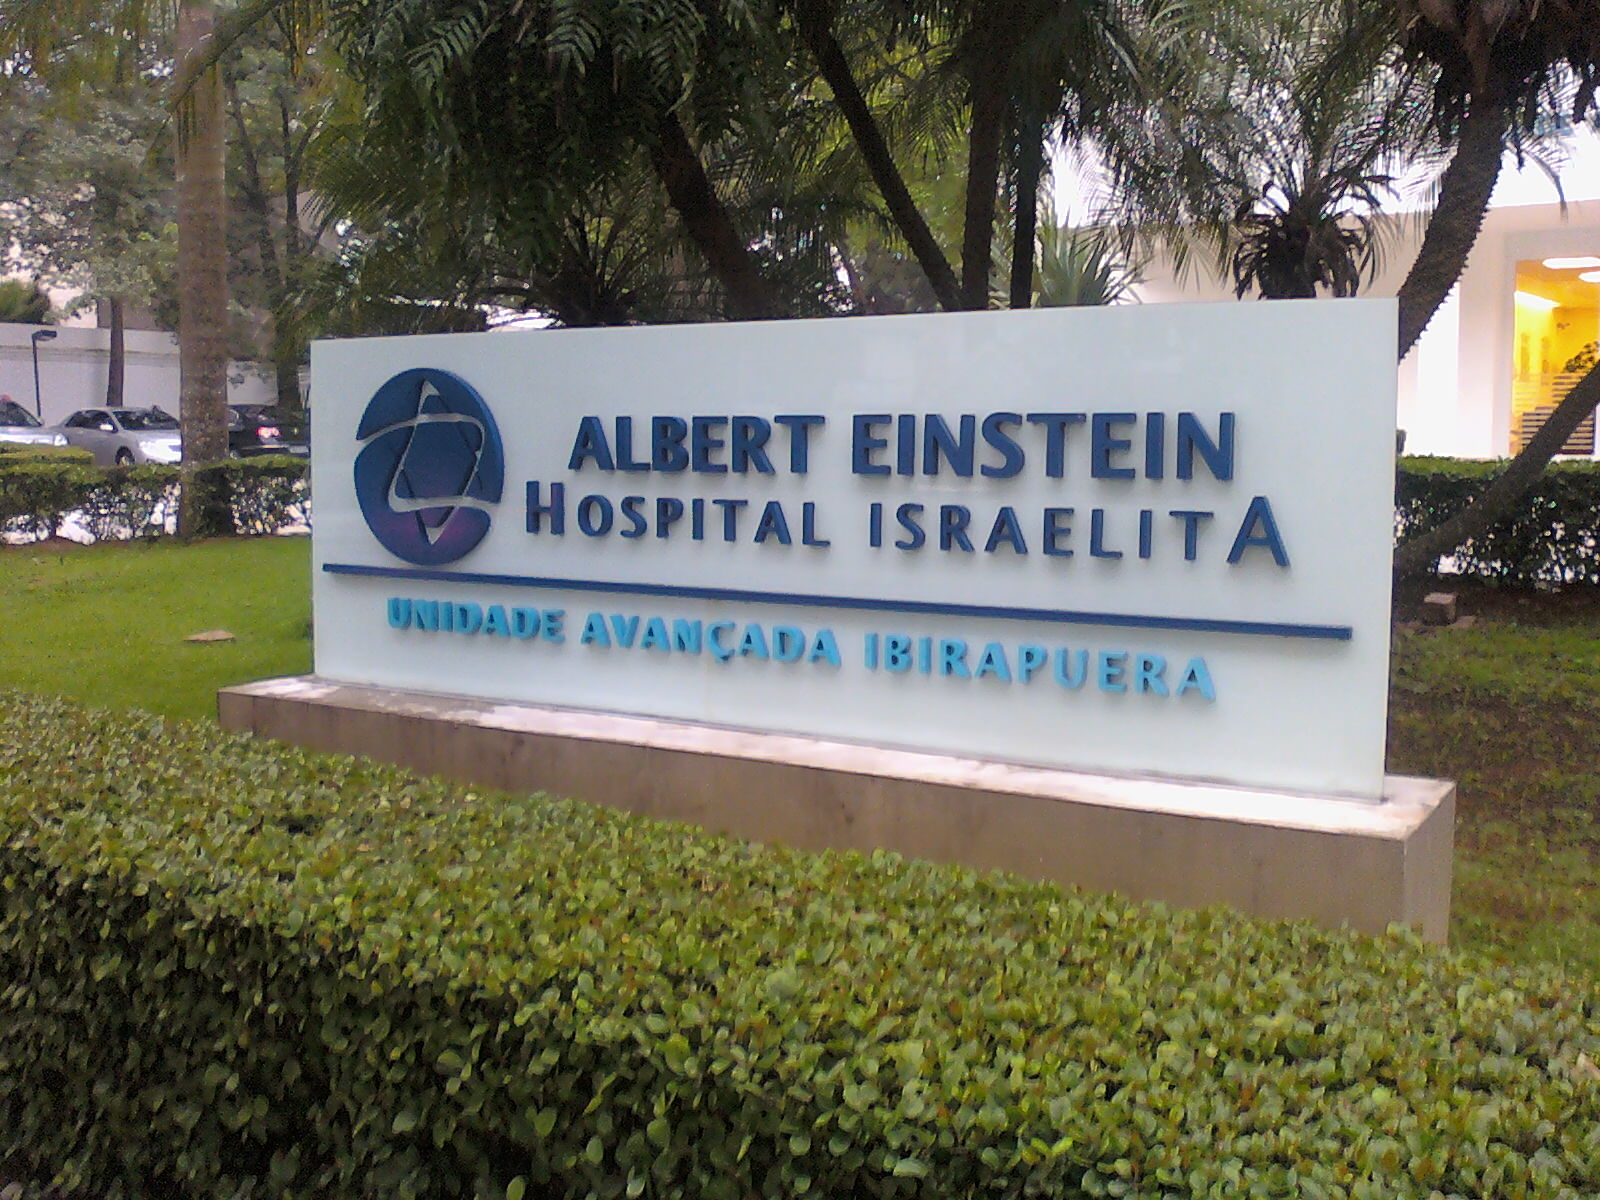 Клиника имени Альберта Эйнштейна, Hospital Israelita Albert Einstein, Сан-Паулу, Бразилия